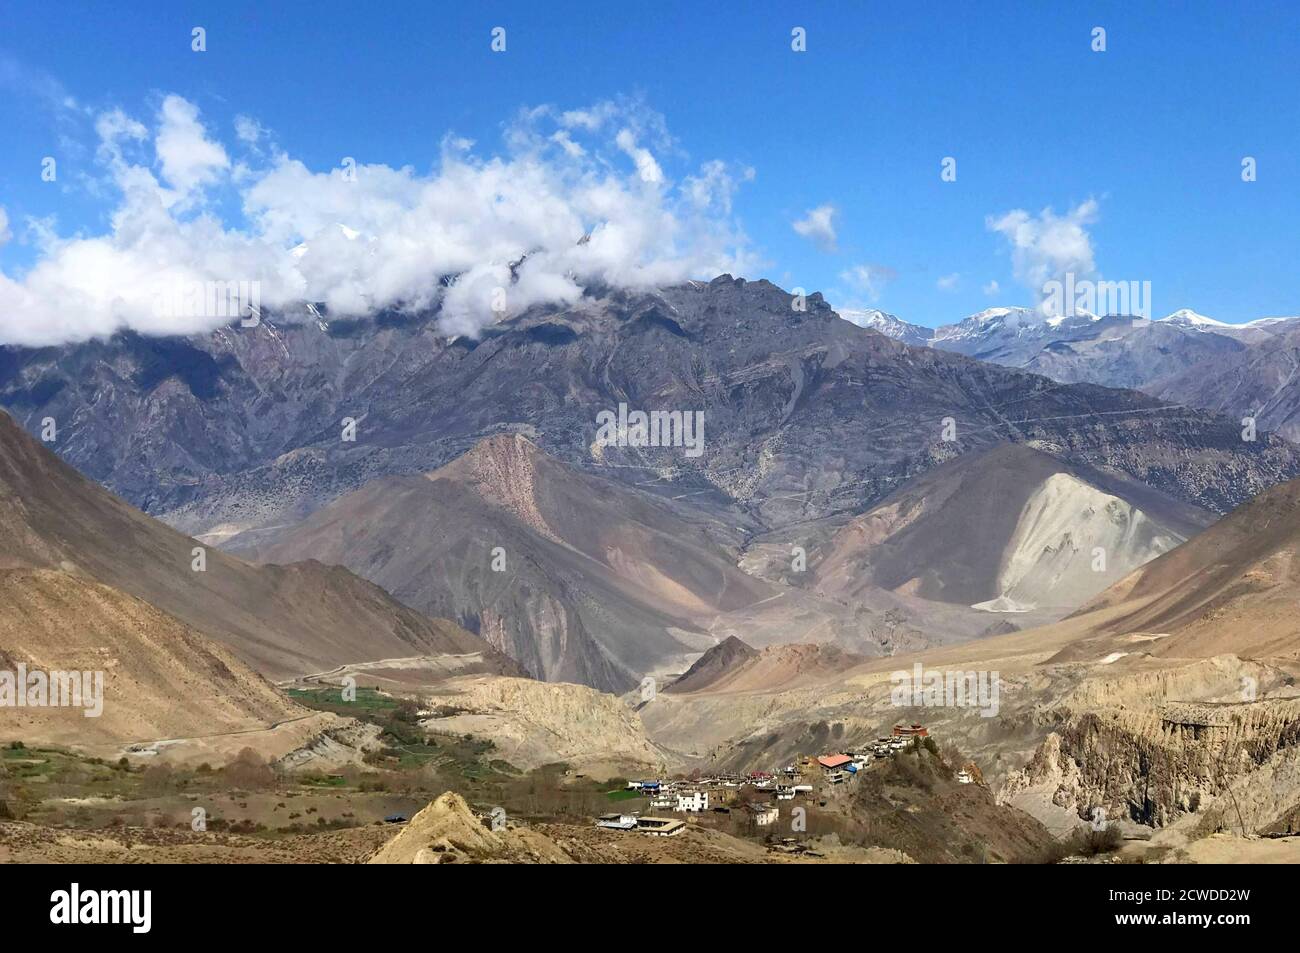 Atemberaubende Himalaya-Landschaft in Mustang Kingdom, Nepal. Unglaubliche bergige Natur. Malerische Wolkenlandschaft über Dhaulagiri Range. Atemberaubender Himalaya. Stockfoto